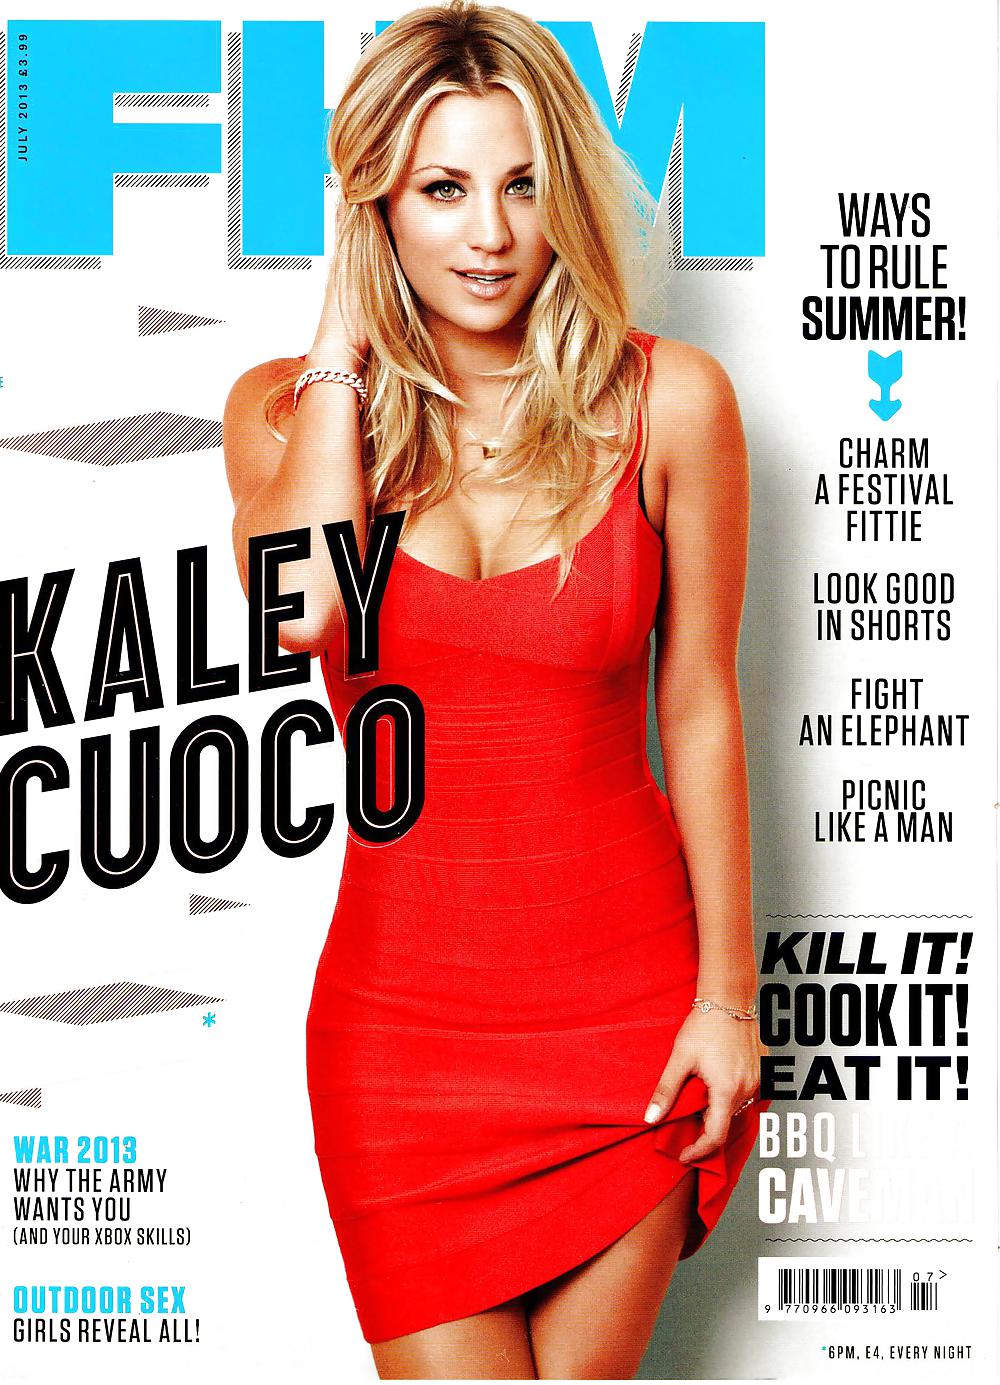 Kaley cuoco - fhm magazine uk julio 2013
 #18221018